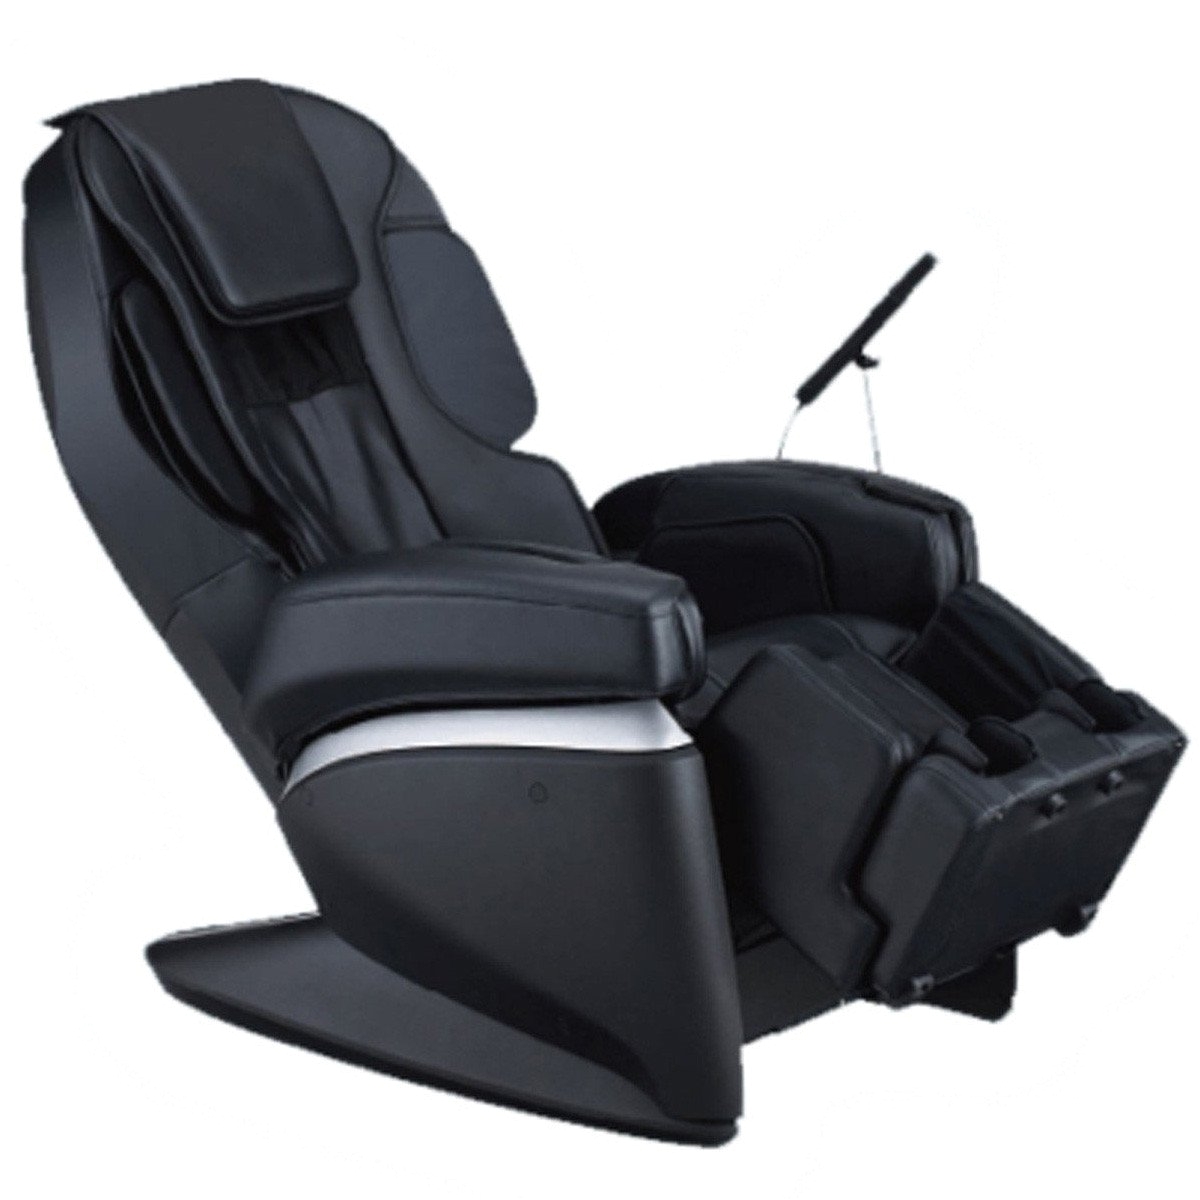 Infinity Iyashi Massage Chair Zero Gravity 1000 Discount On the Osaki Jp Premium 4 0 Made In Japan